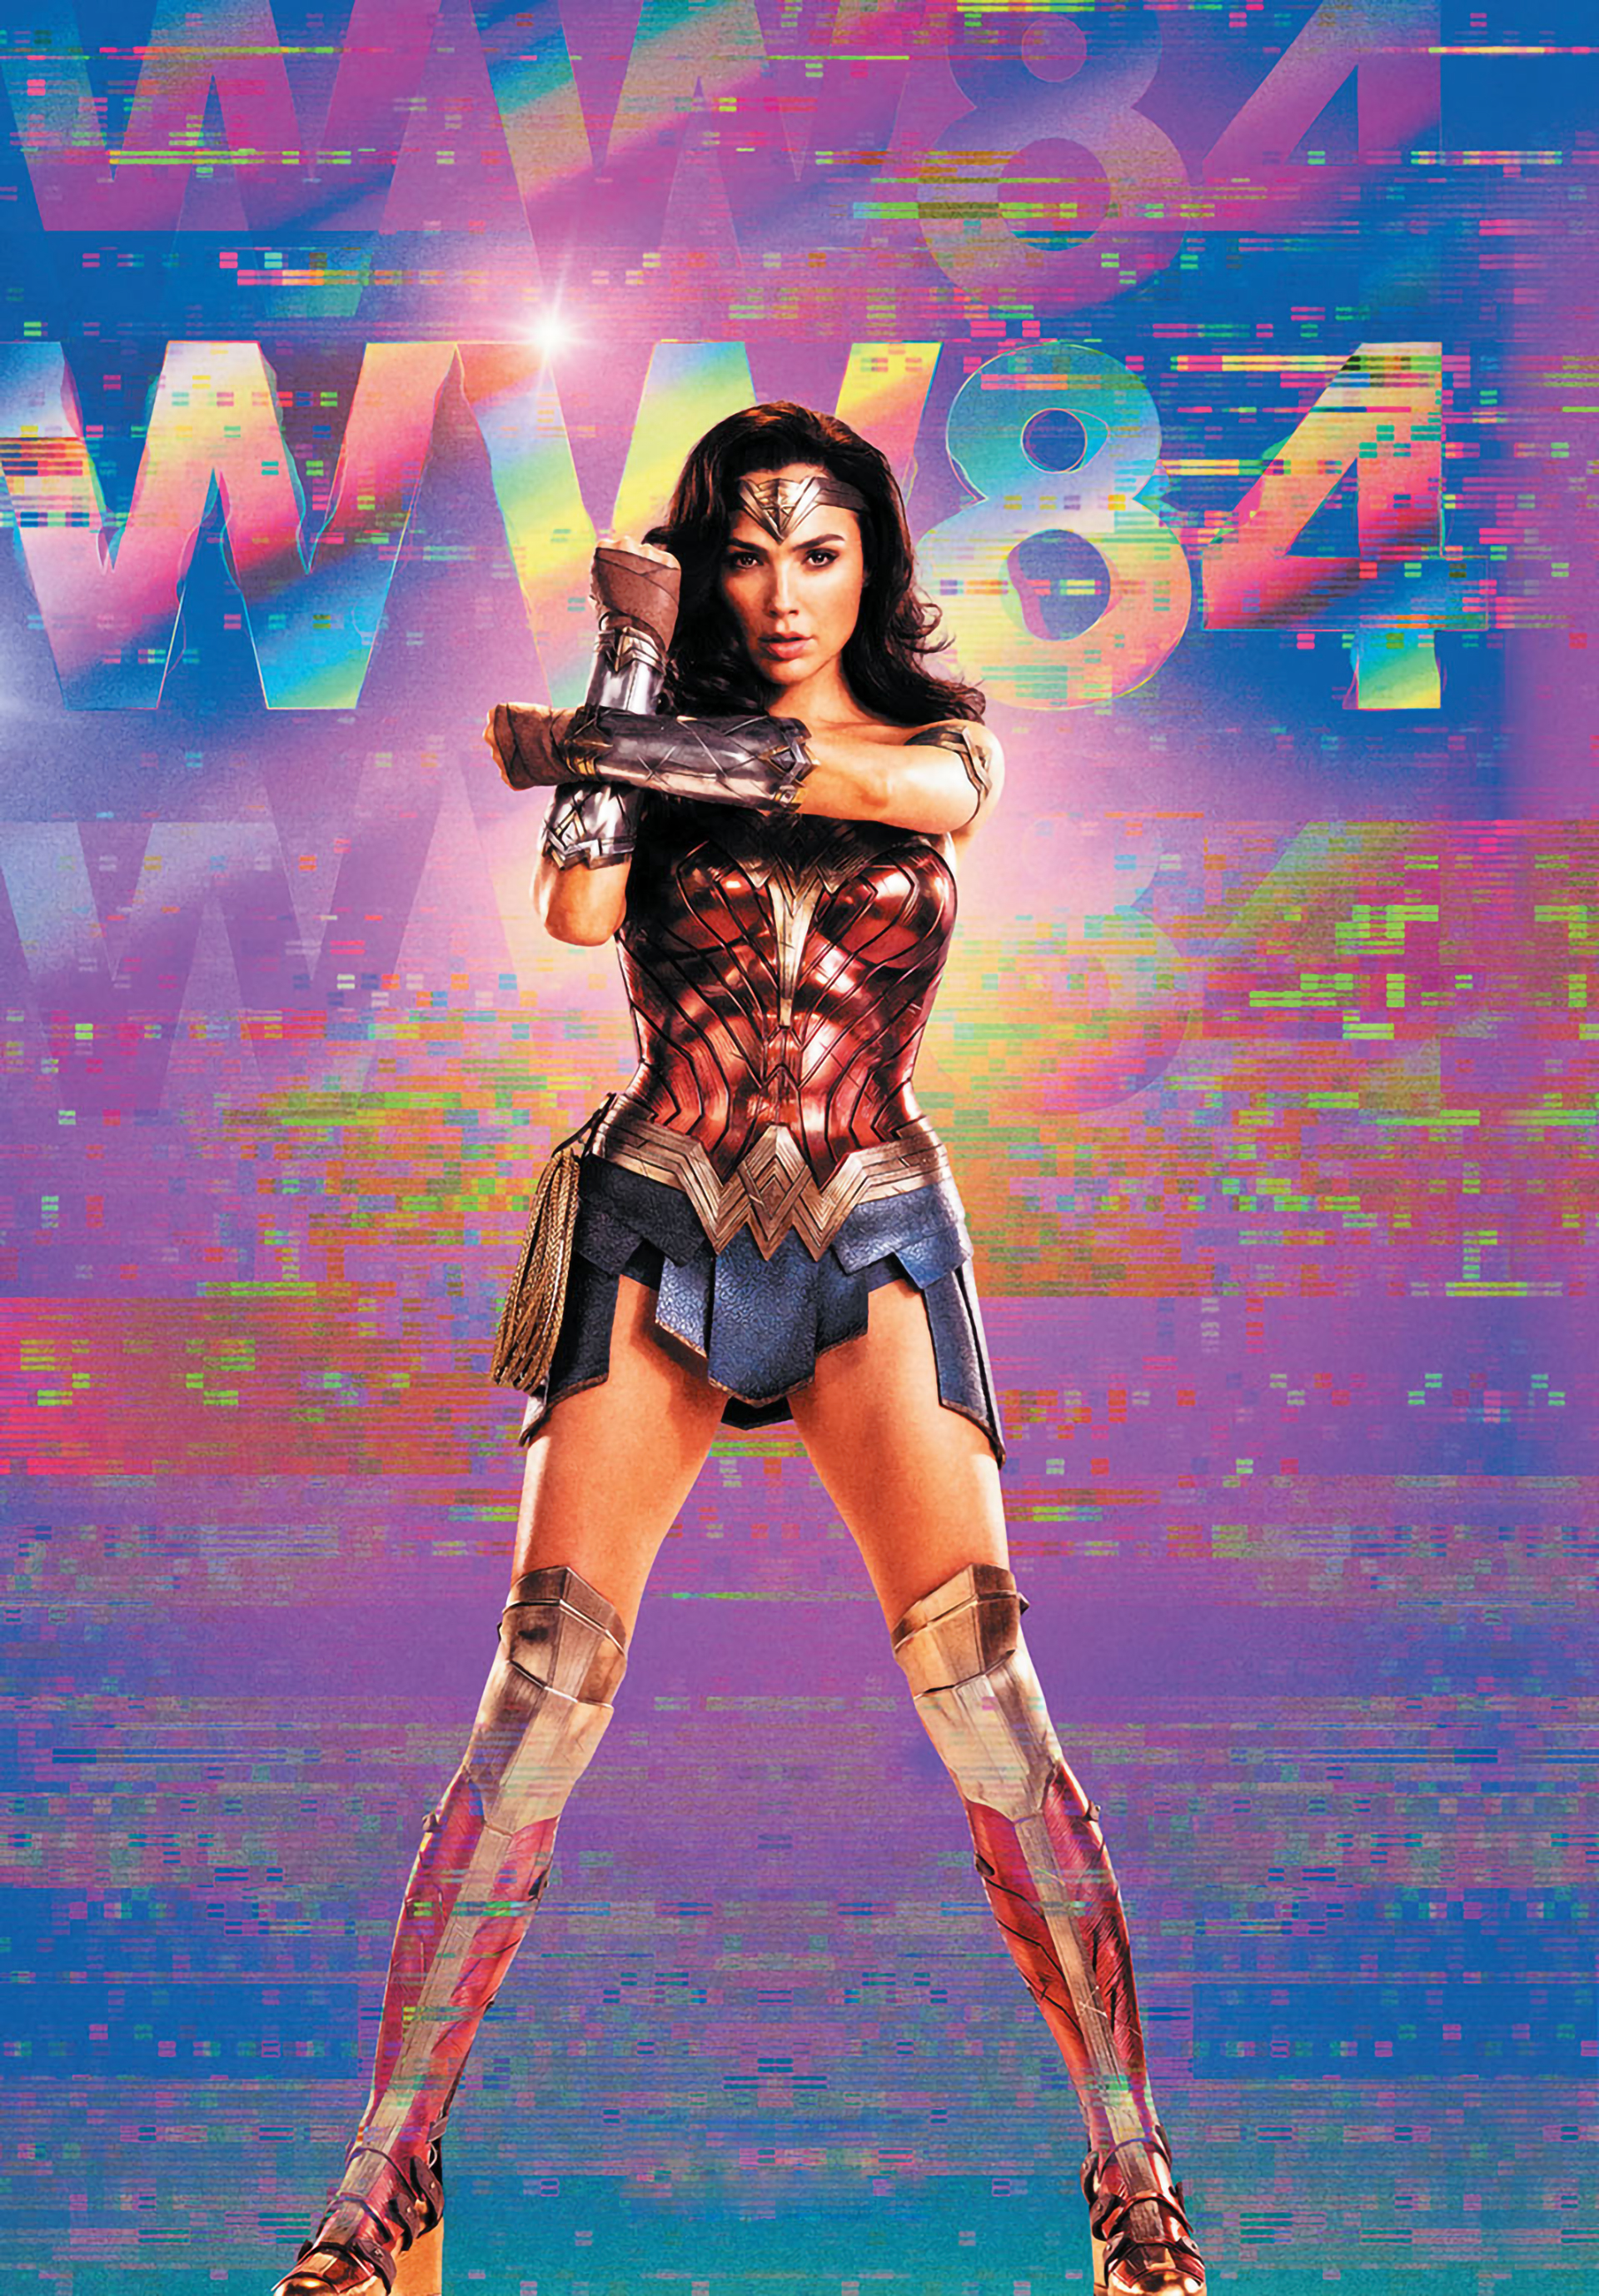 DC Wonder Woman 1984 Wallpaper, HD Movies 4K Wallpapers, Images, Photos